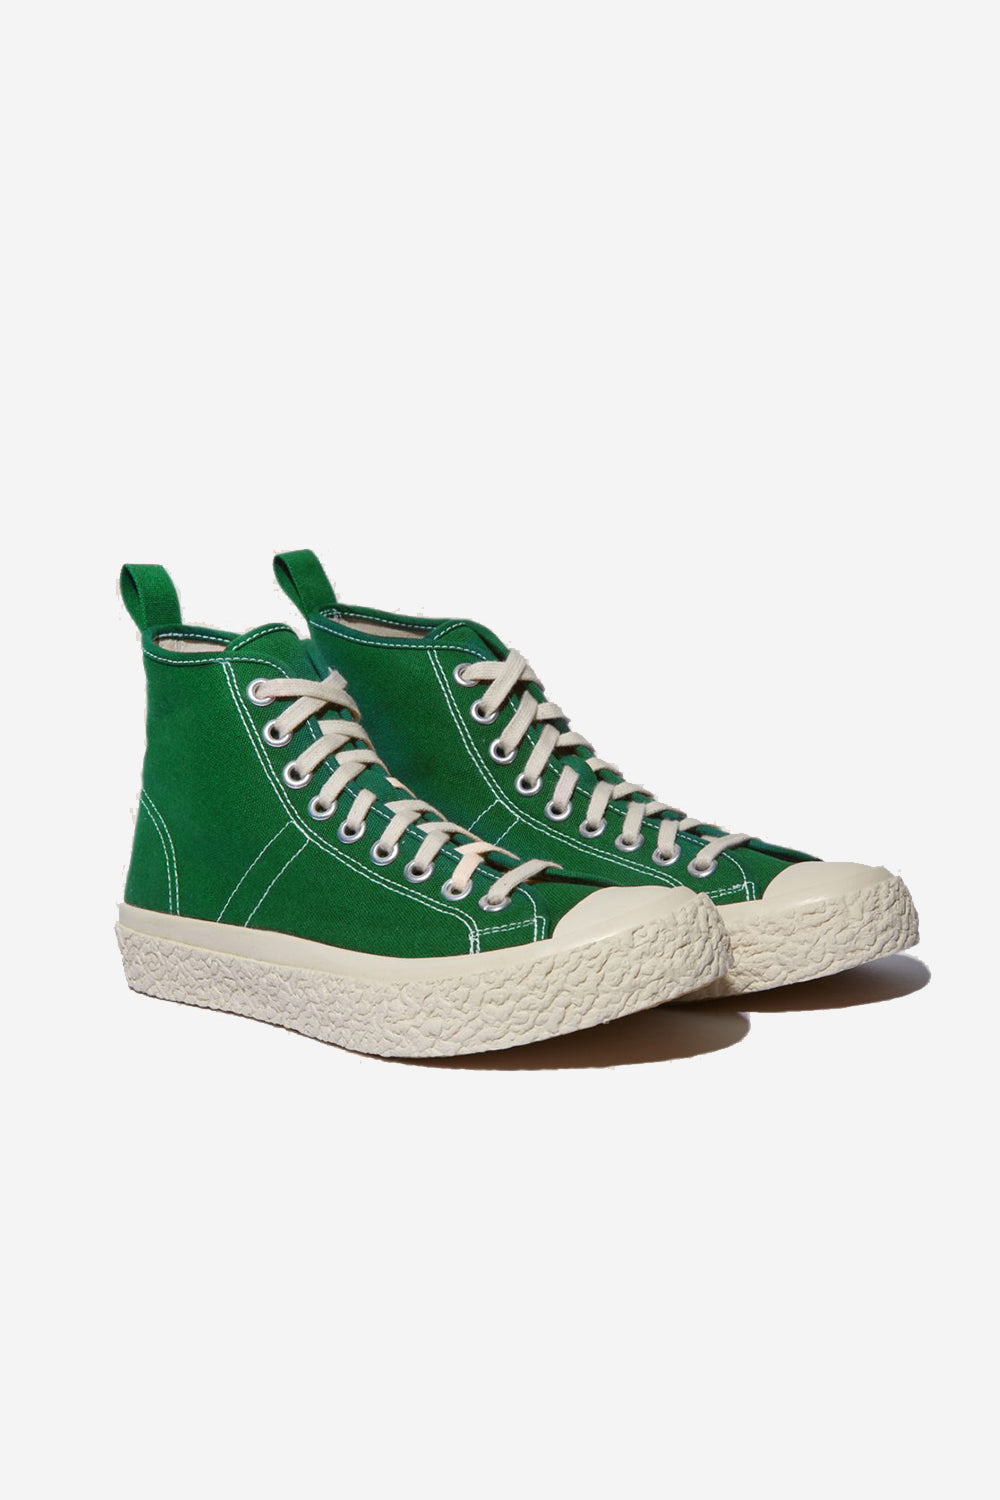 Mens High Top Sneaker, Green